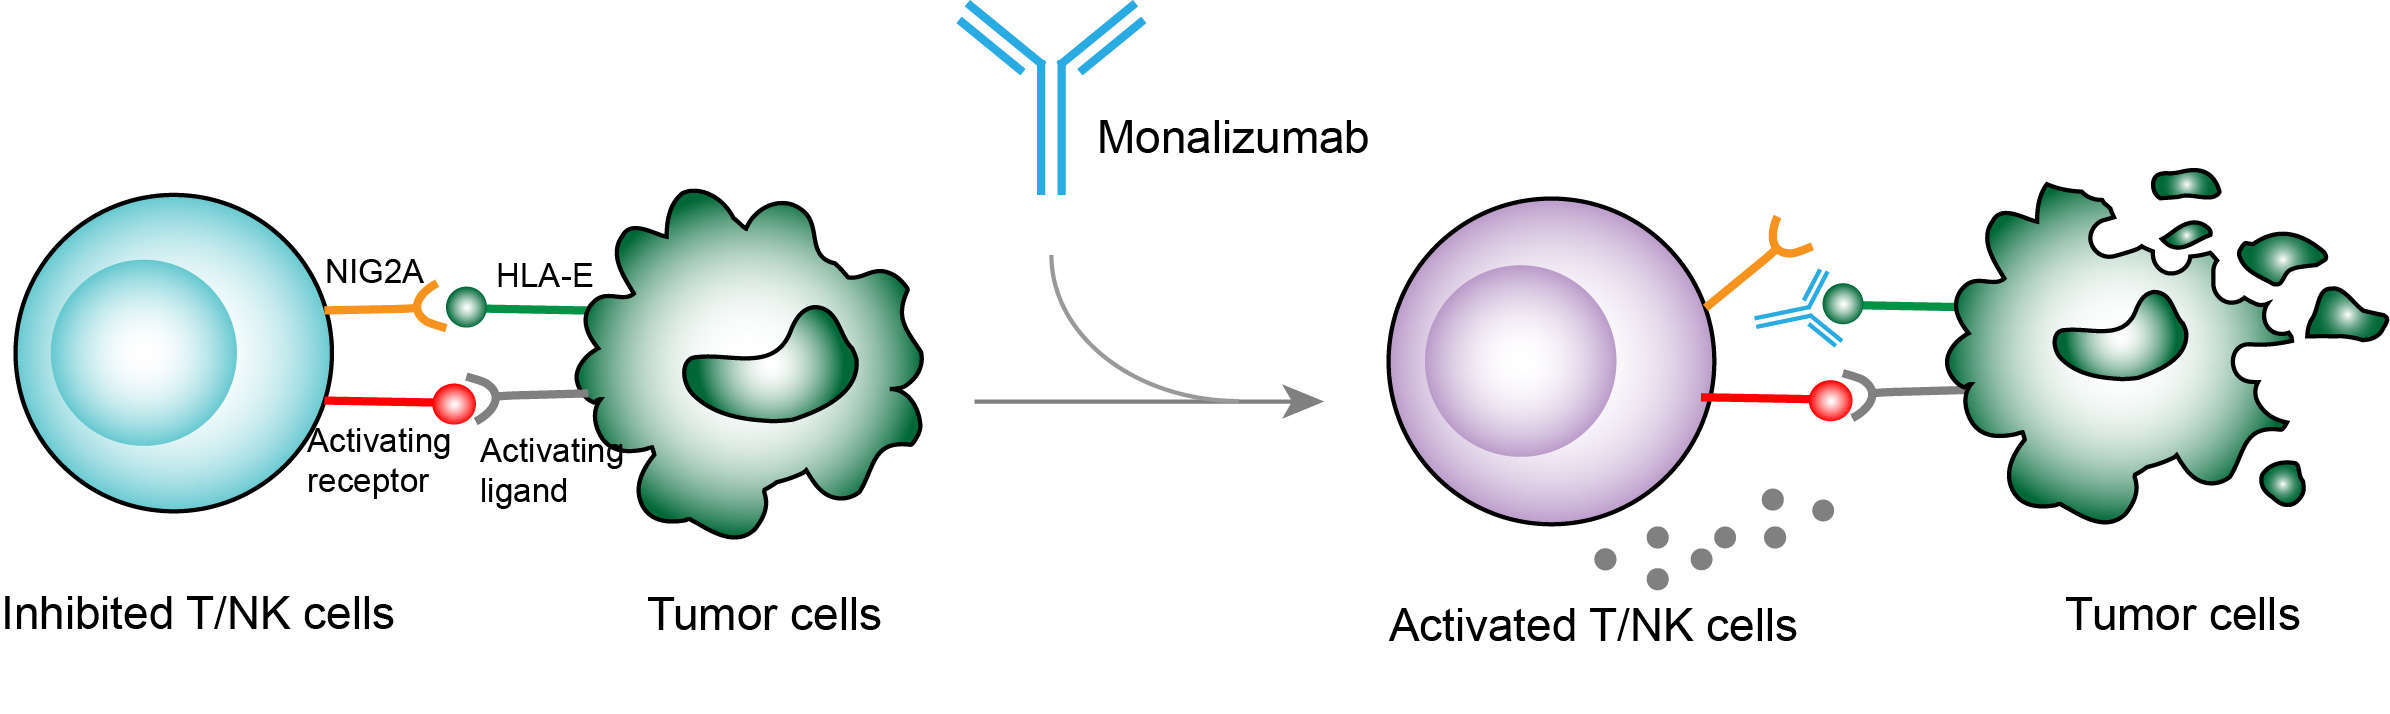 Mechanism of action of Monalizumab